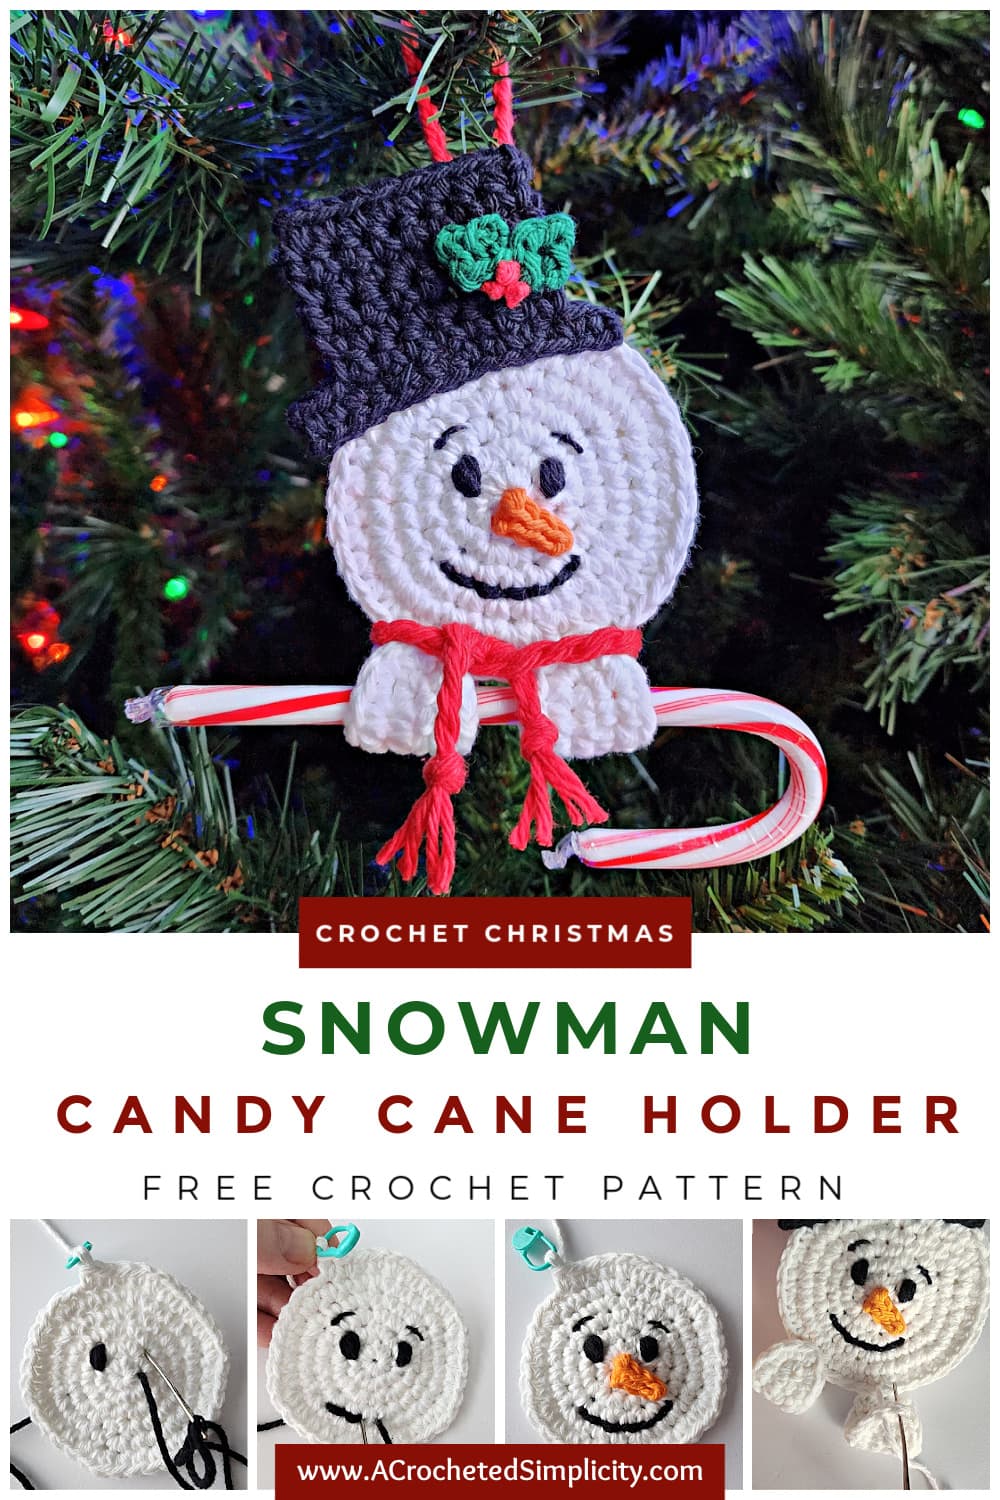 crochet snowman candy cane holder hanging on tree pinterest image 1